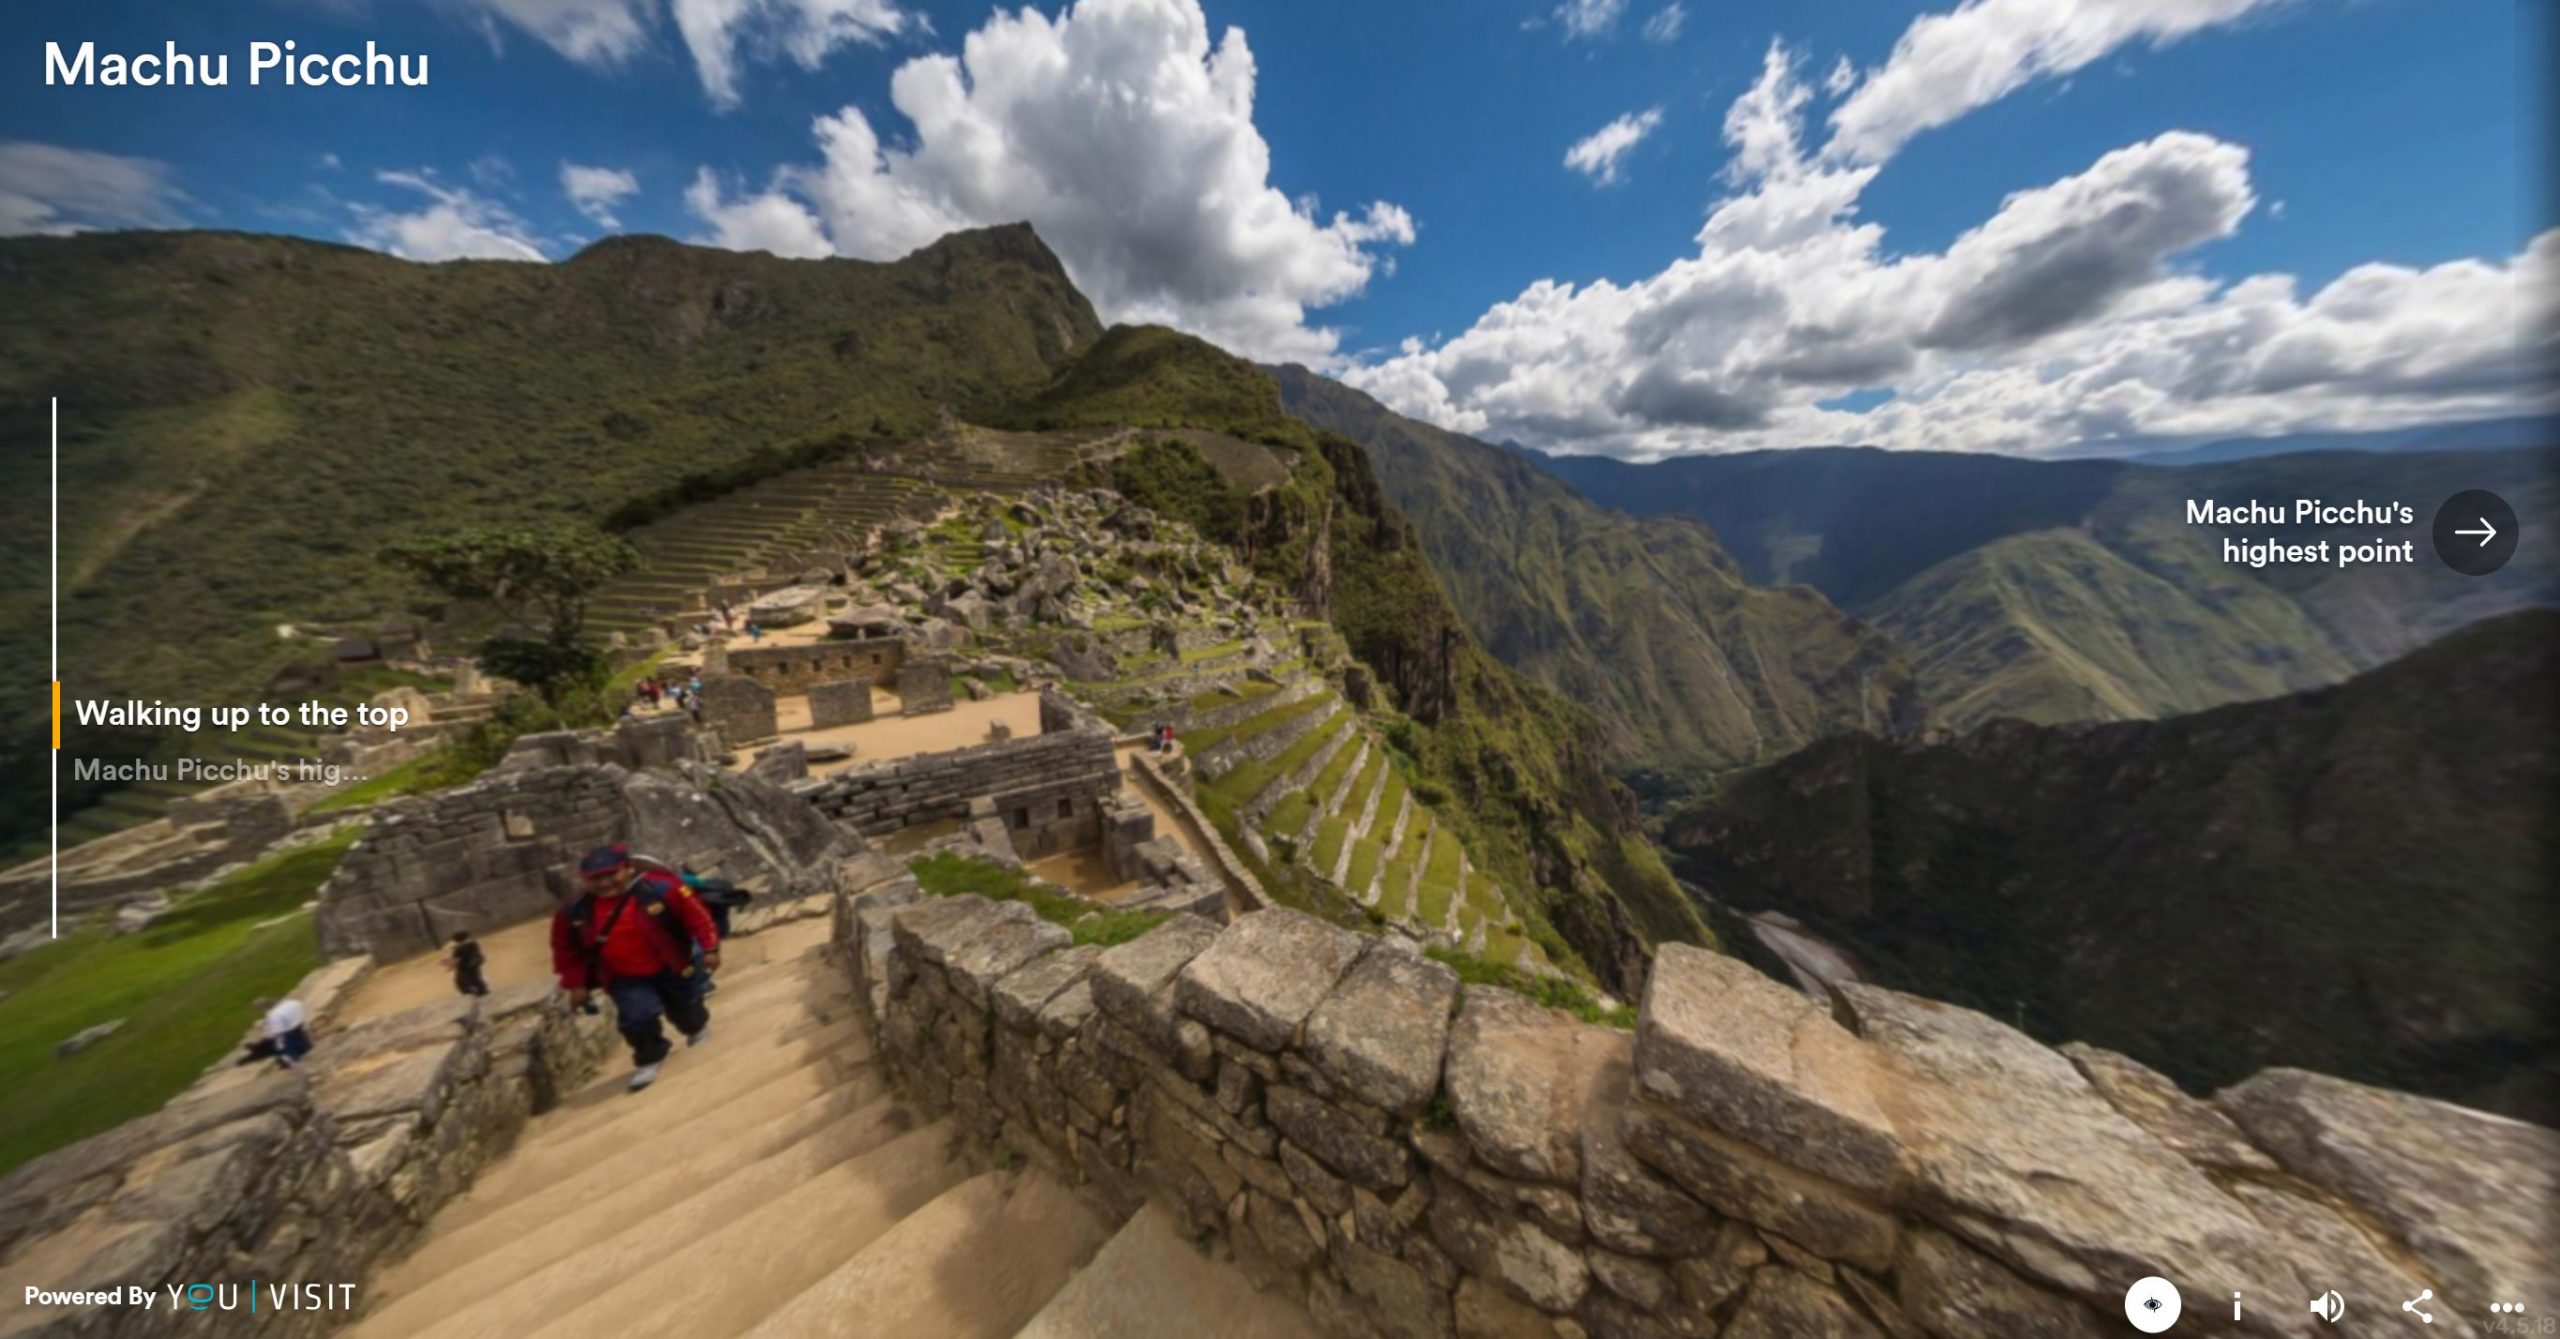 Virtual Tour of Machu Picchu